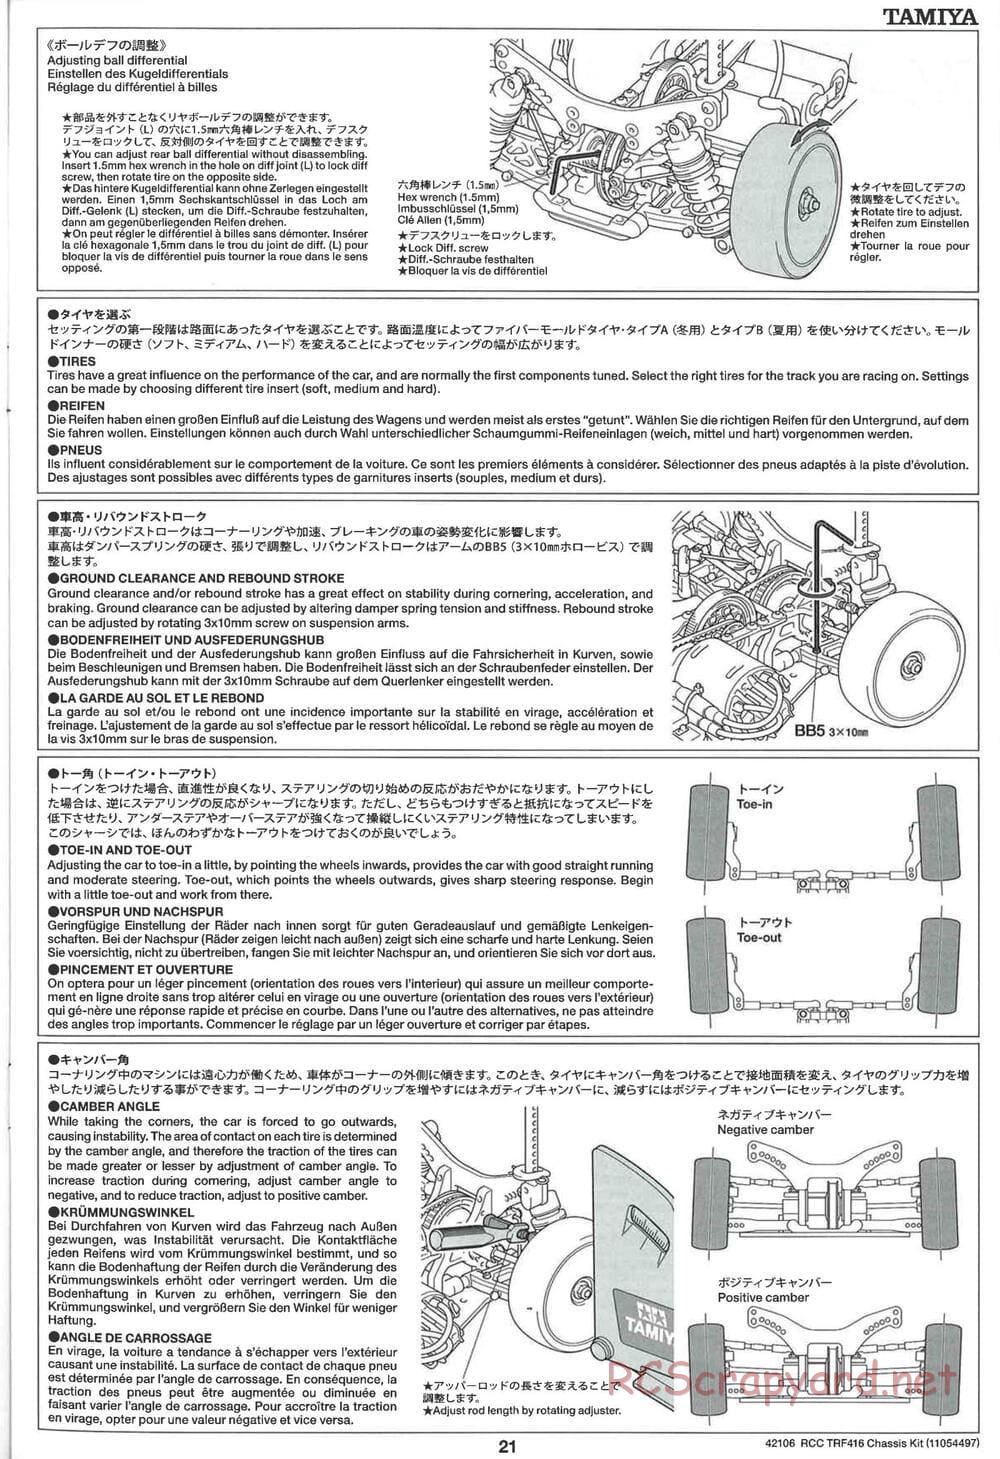 Tamiya - TRF416 Chassis - Manual - Page 21